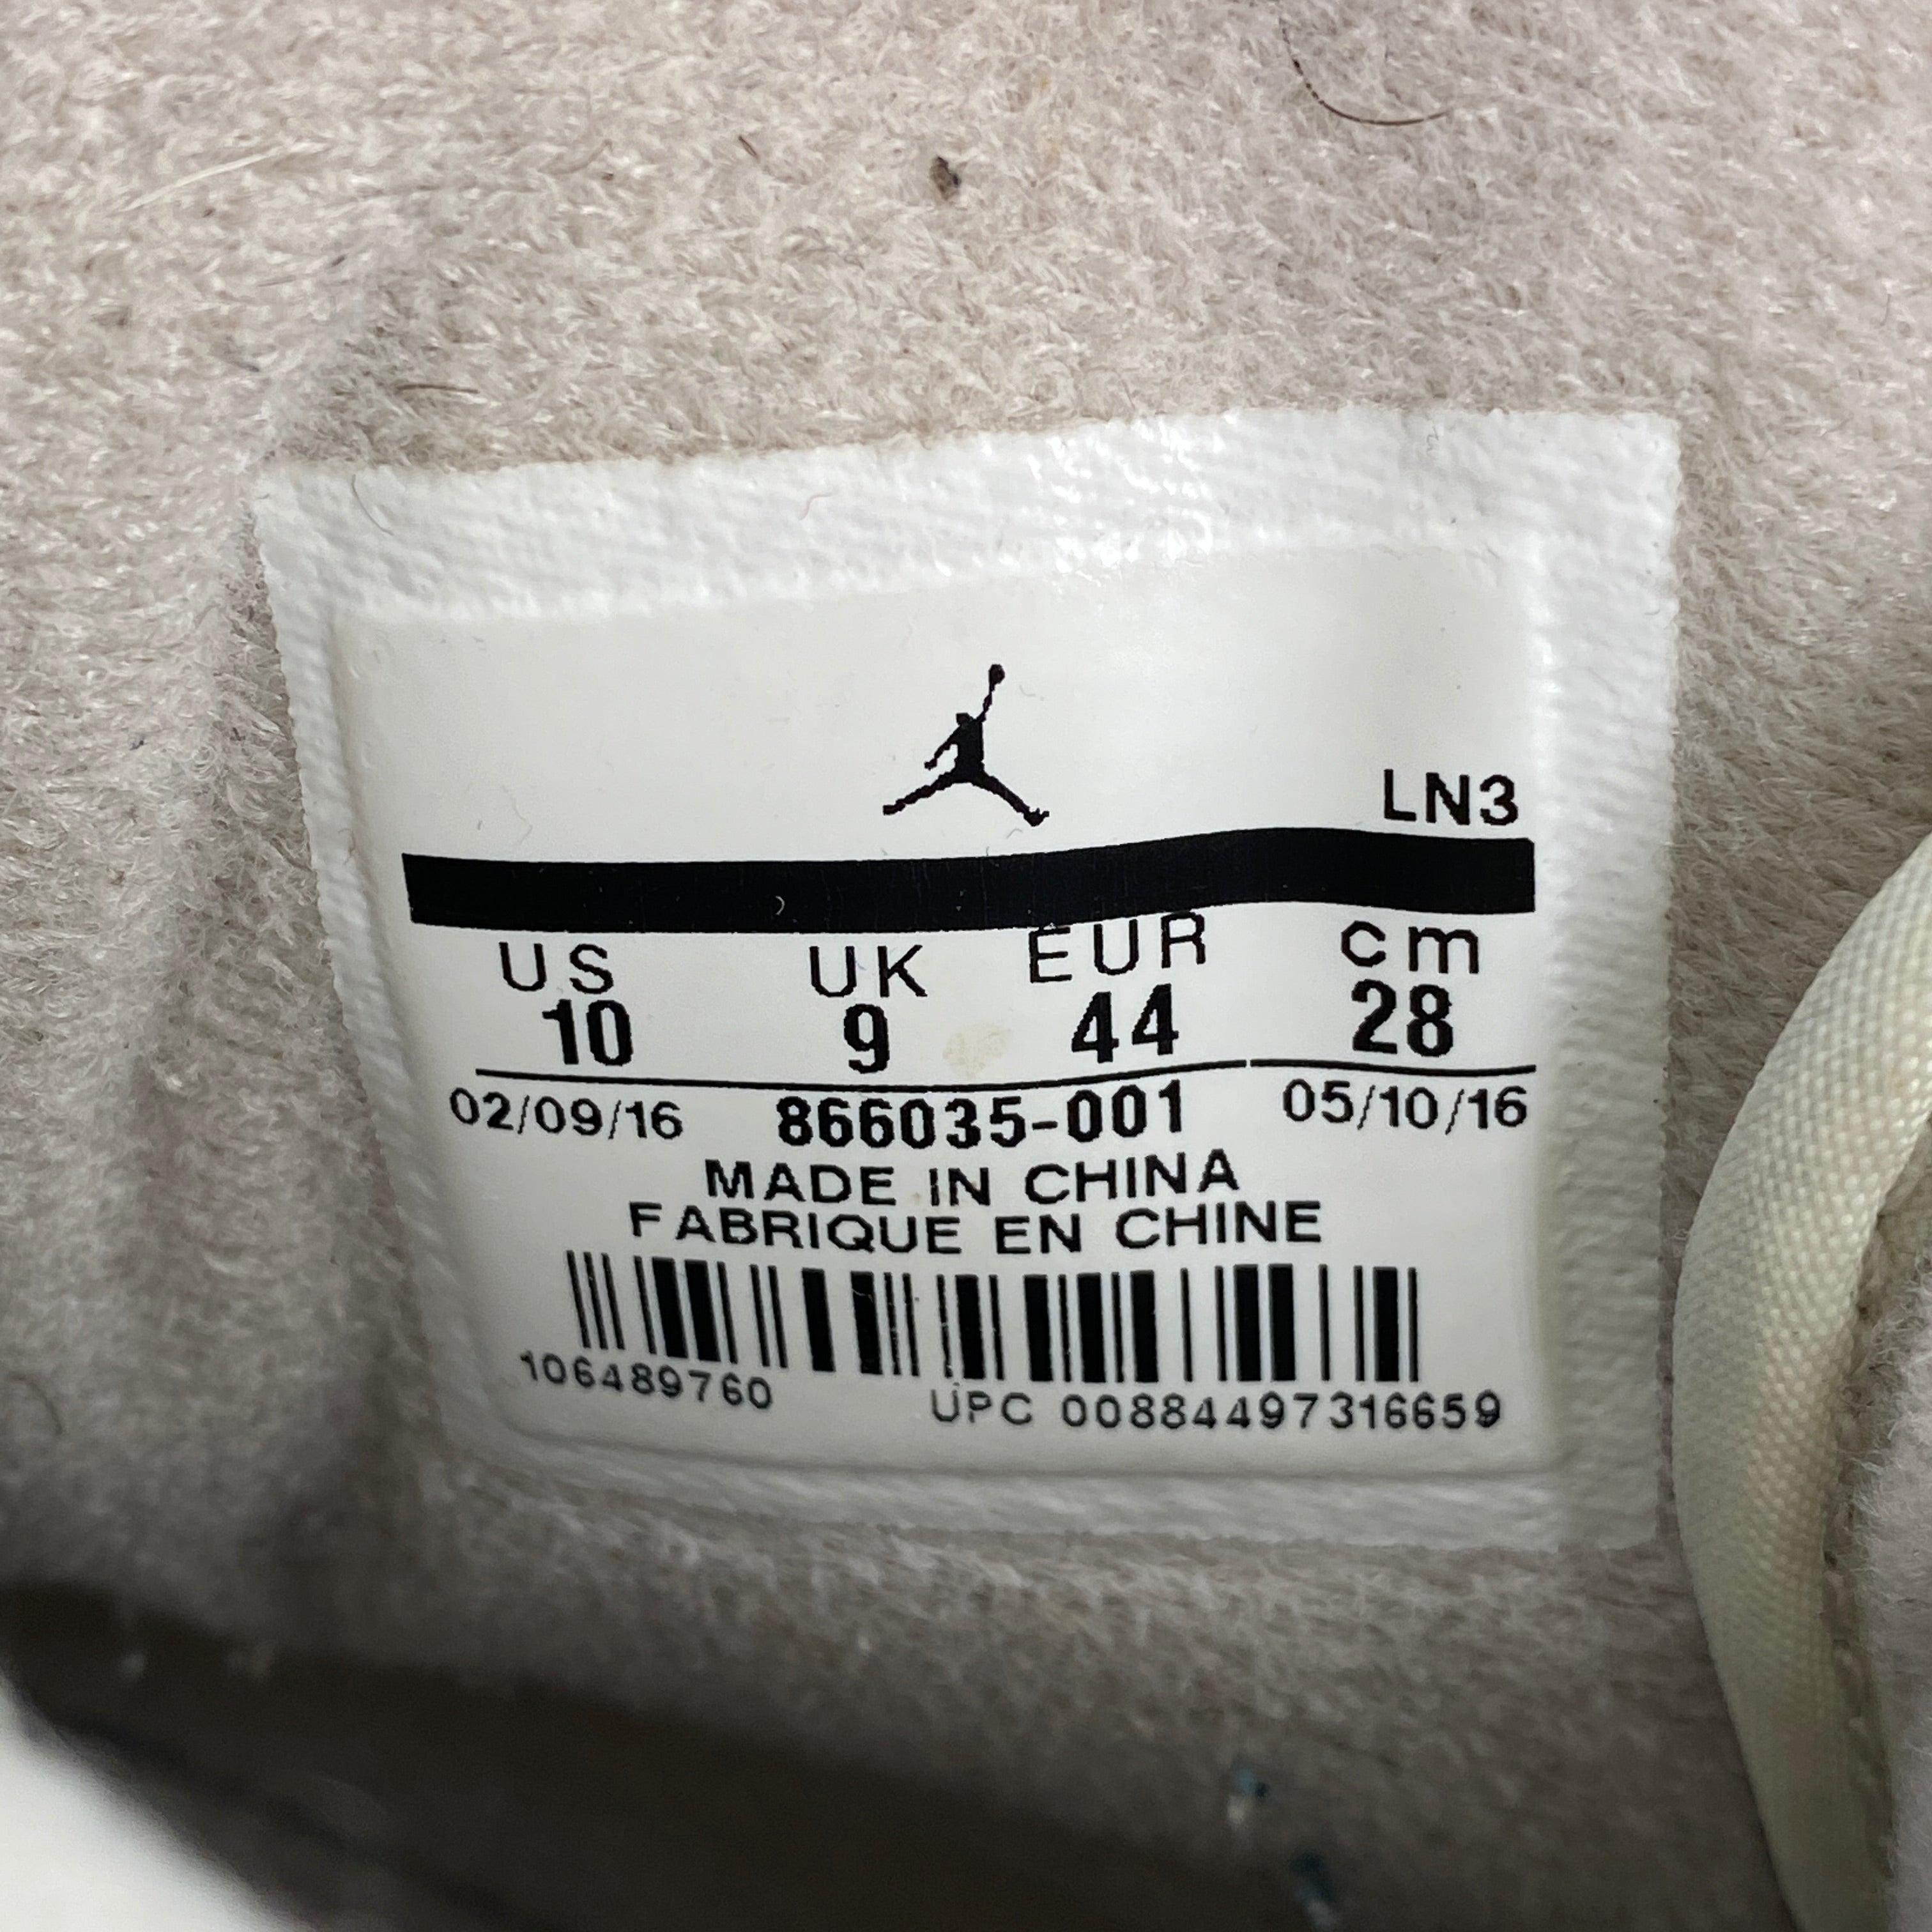 Air Jordan 2 Retro "QUAI 54" 2016 Used Size 10